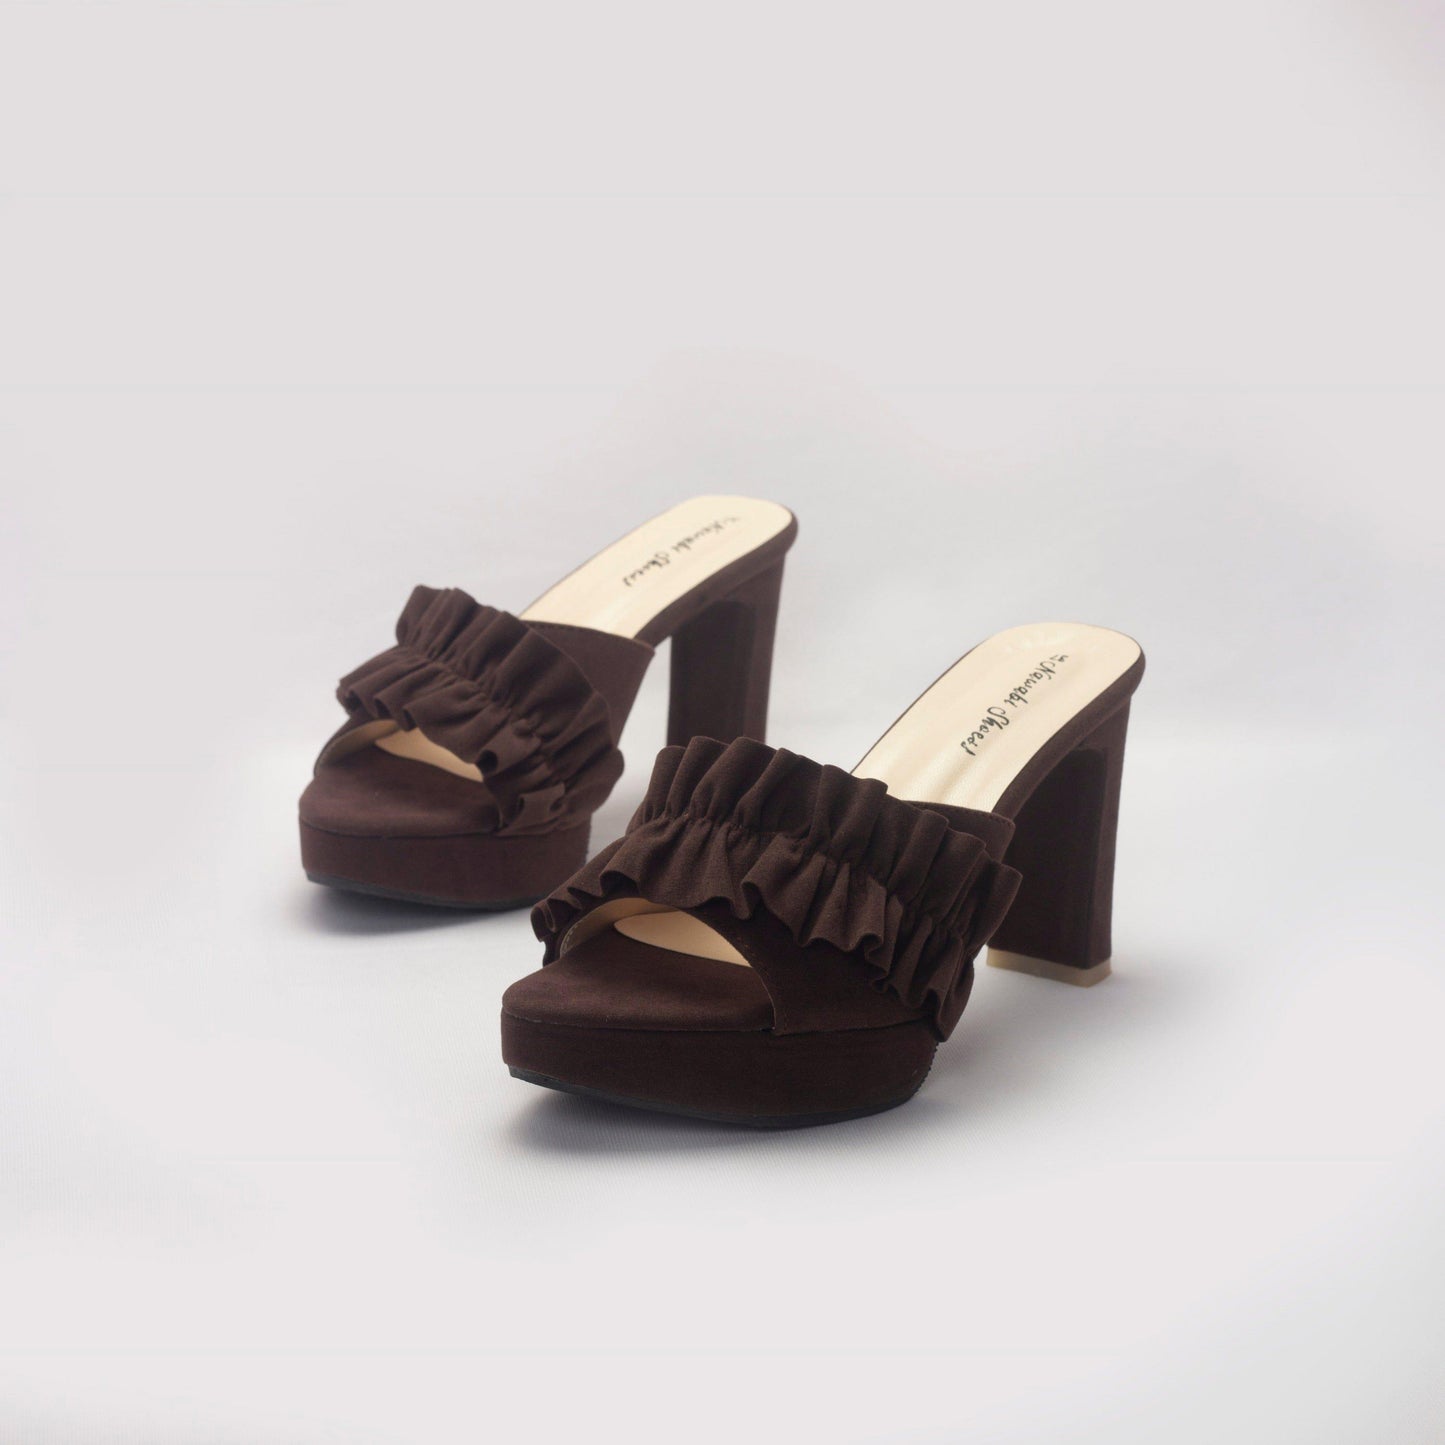 Nawabi Shoes BD Shoes 35 / chocolate Stylish and Comfortable Balance Heels